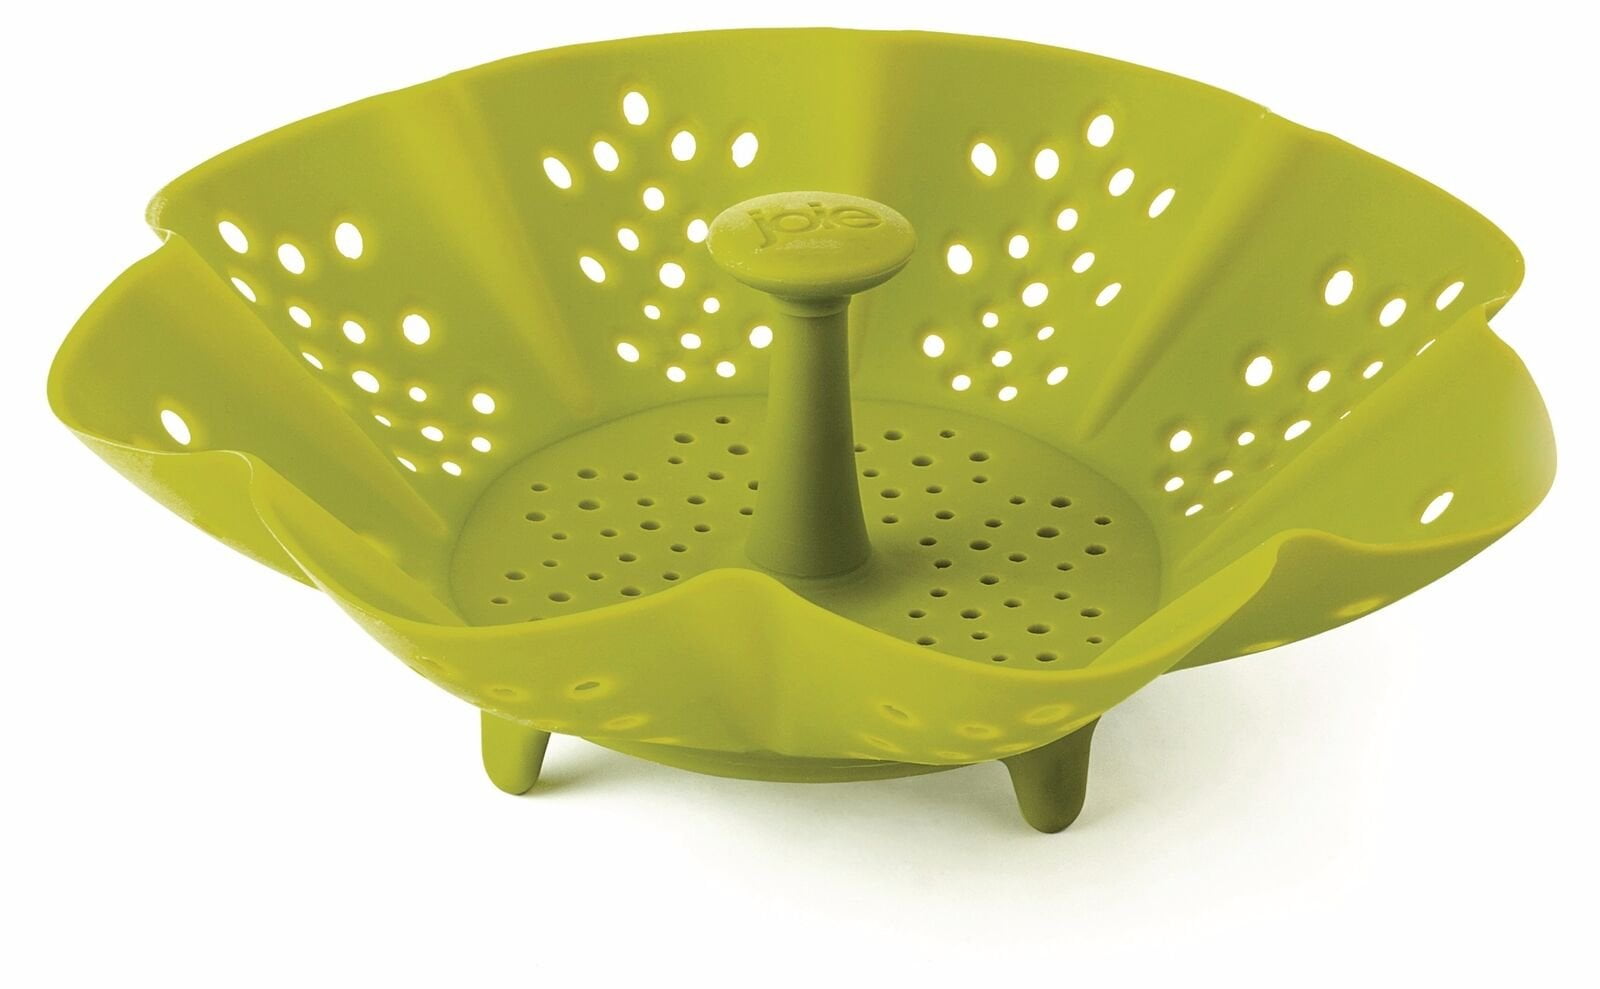 Dropship 1pc Silicone Steamer Basket Air Holes Design With Feet